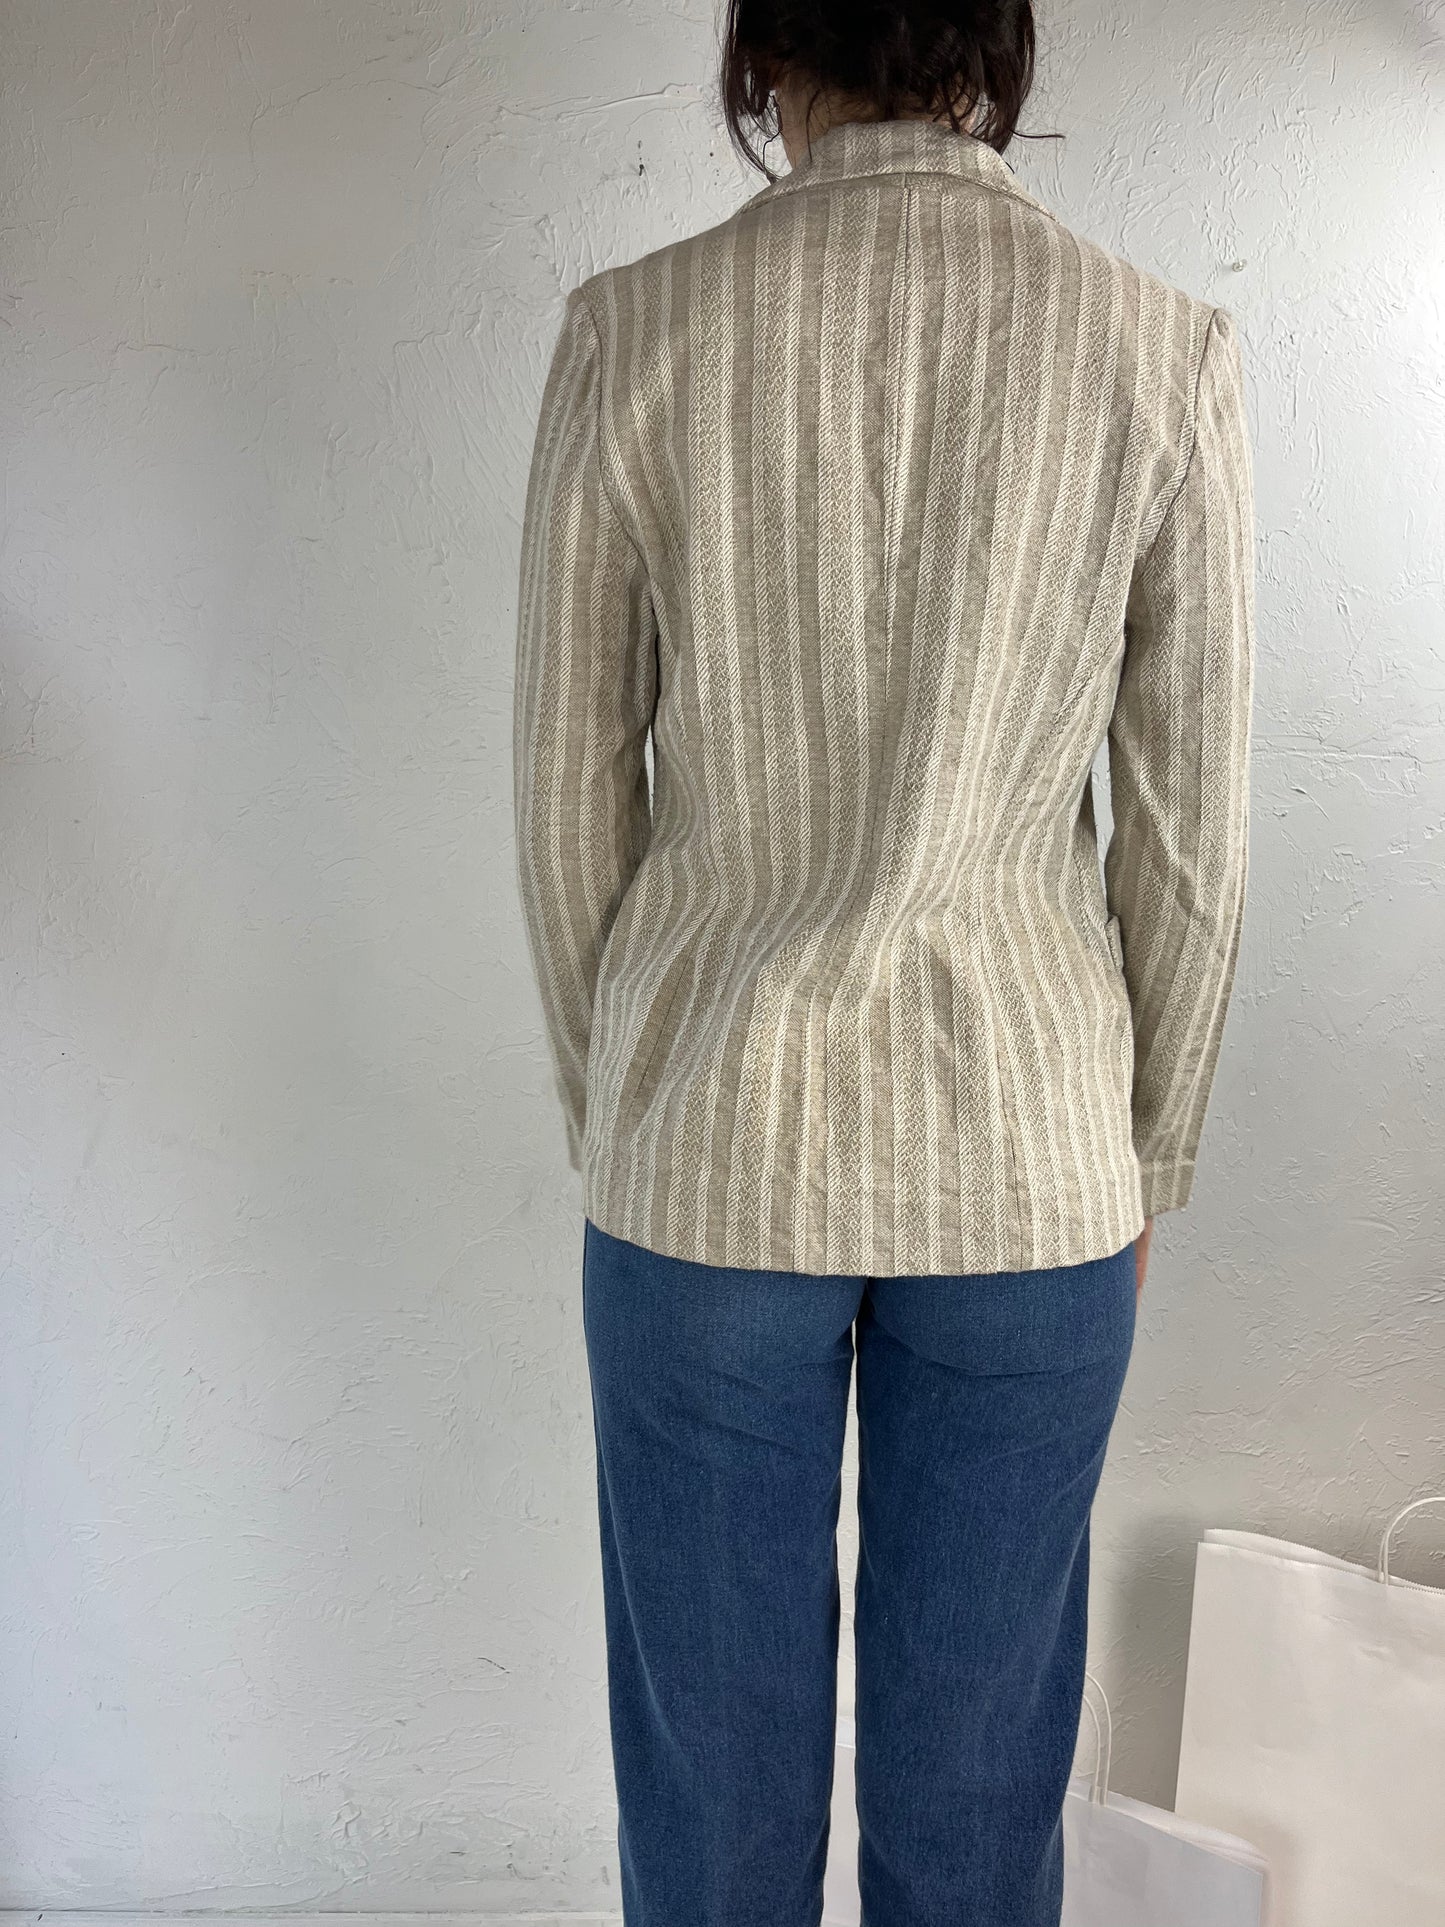 Vintage Handmade Beige Striped Fitted Blazer Jacket / Small